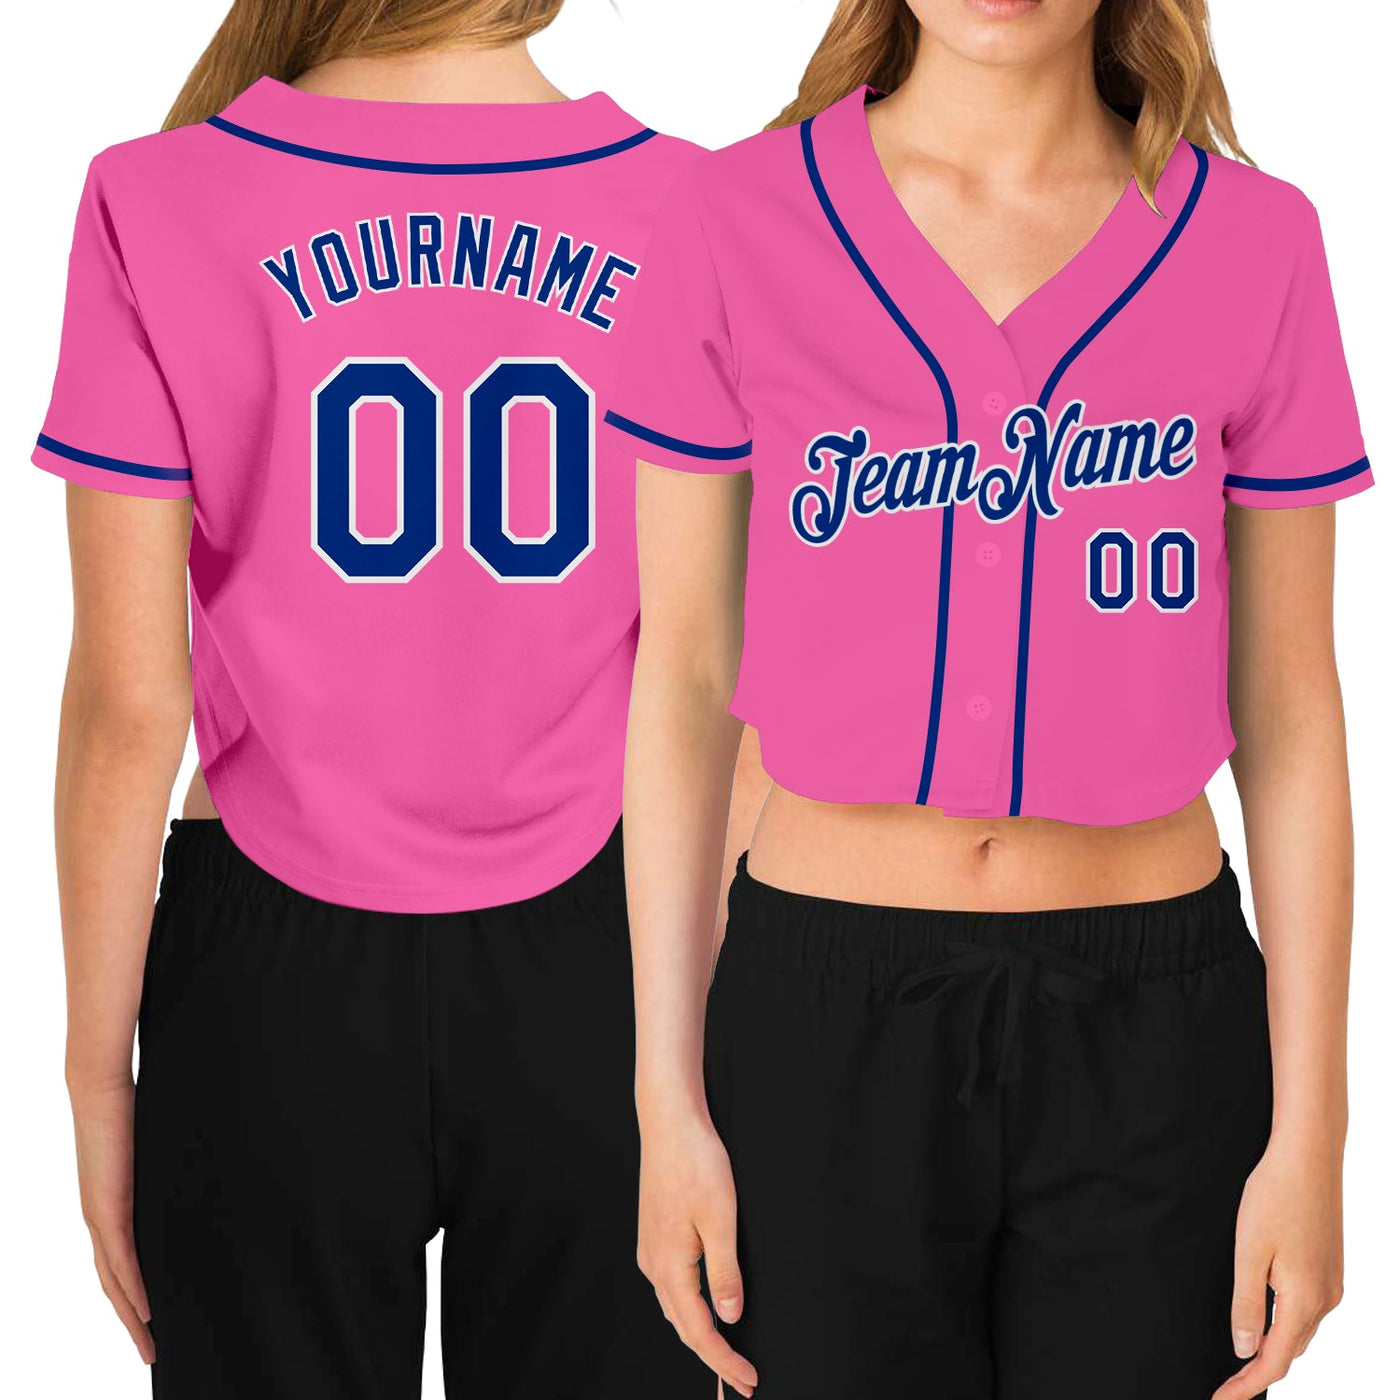 Custom Women's Pink Royal-White V-Neck Cropped Baseball Jersey - Owls Matrix LTD